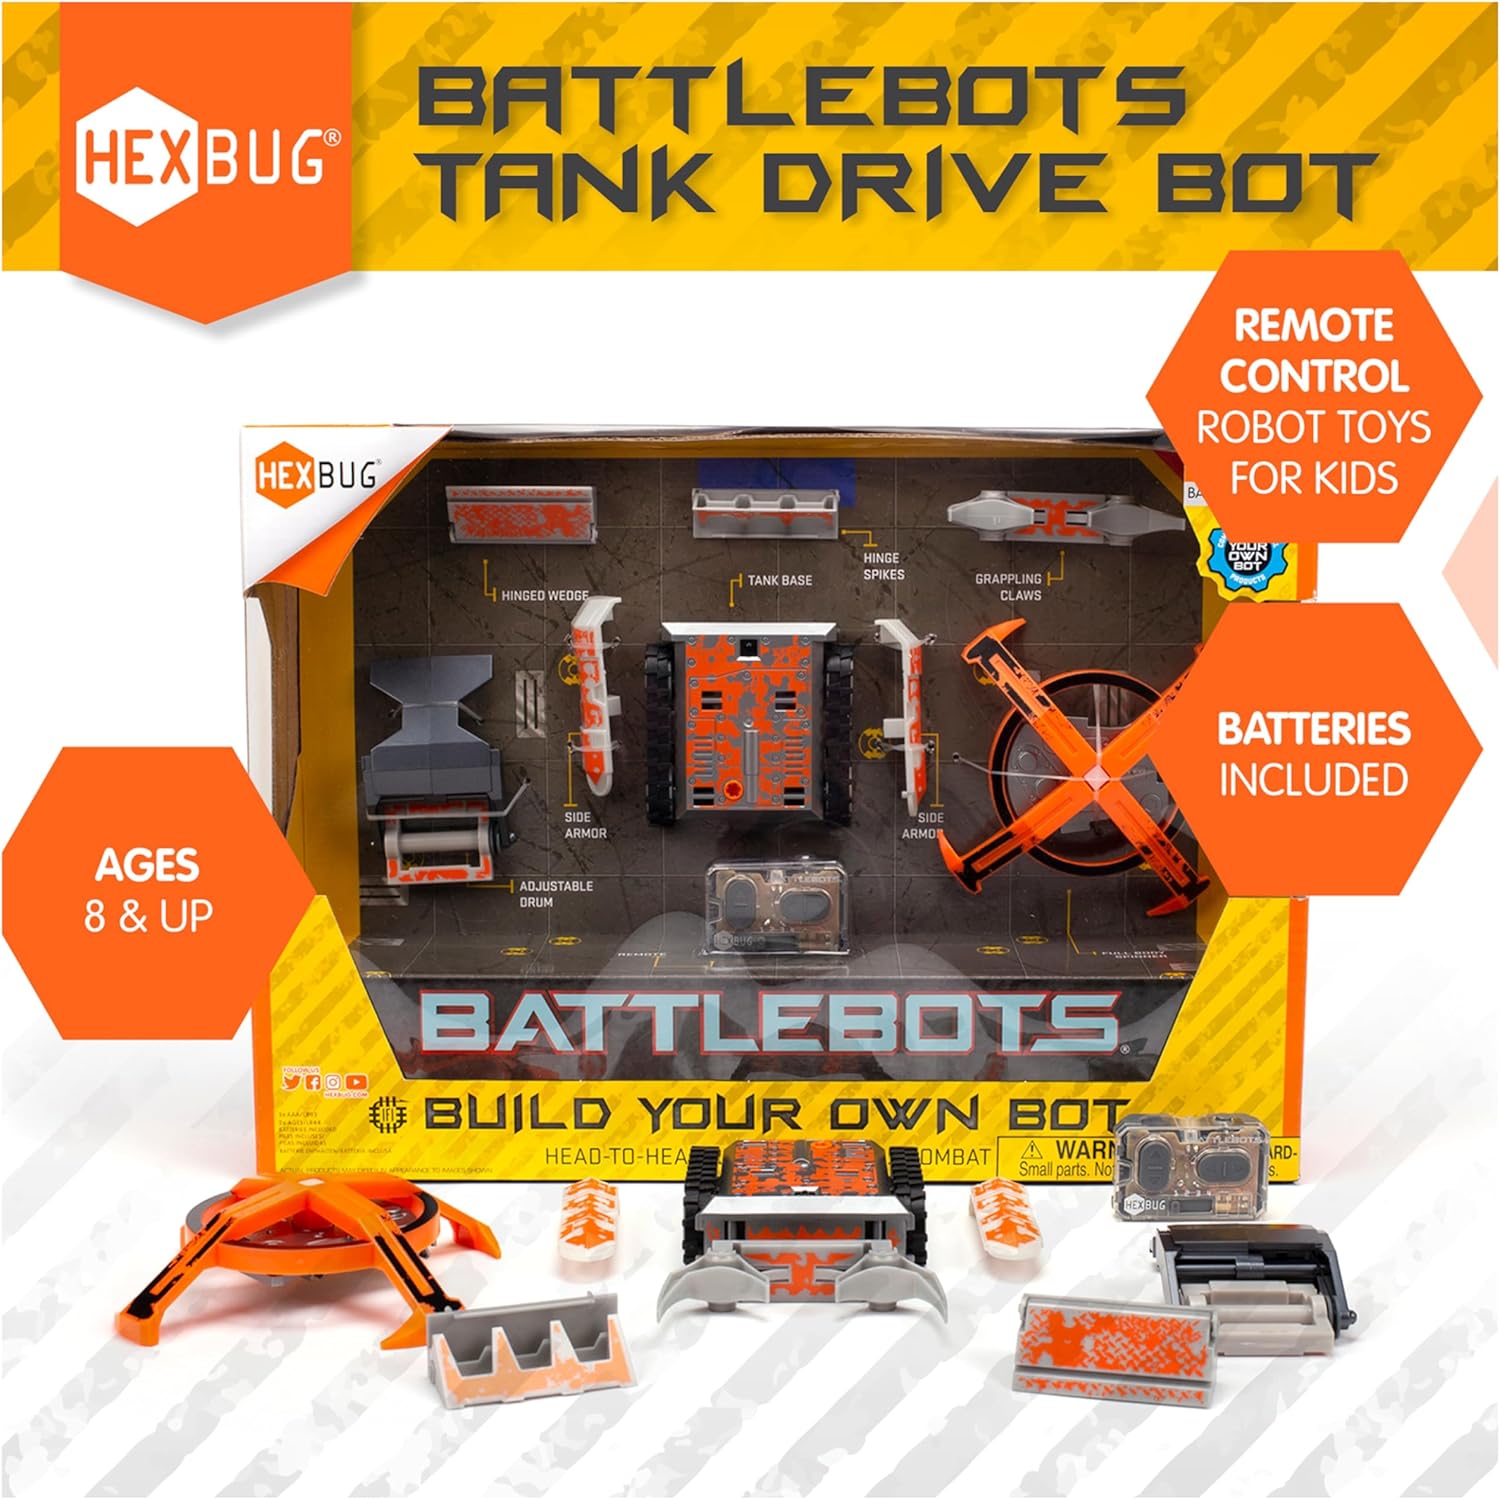 HEXBUG BattleBots Build Your Own Bot Tank Drive